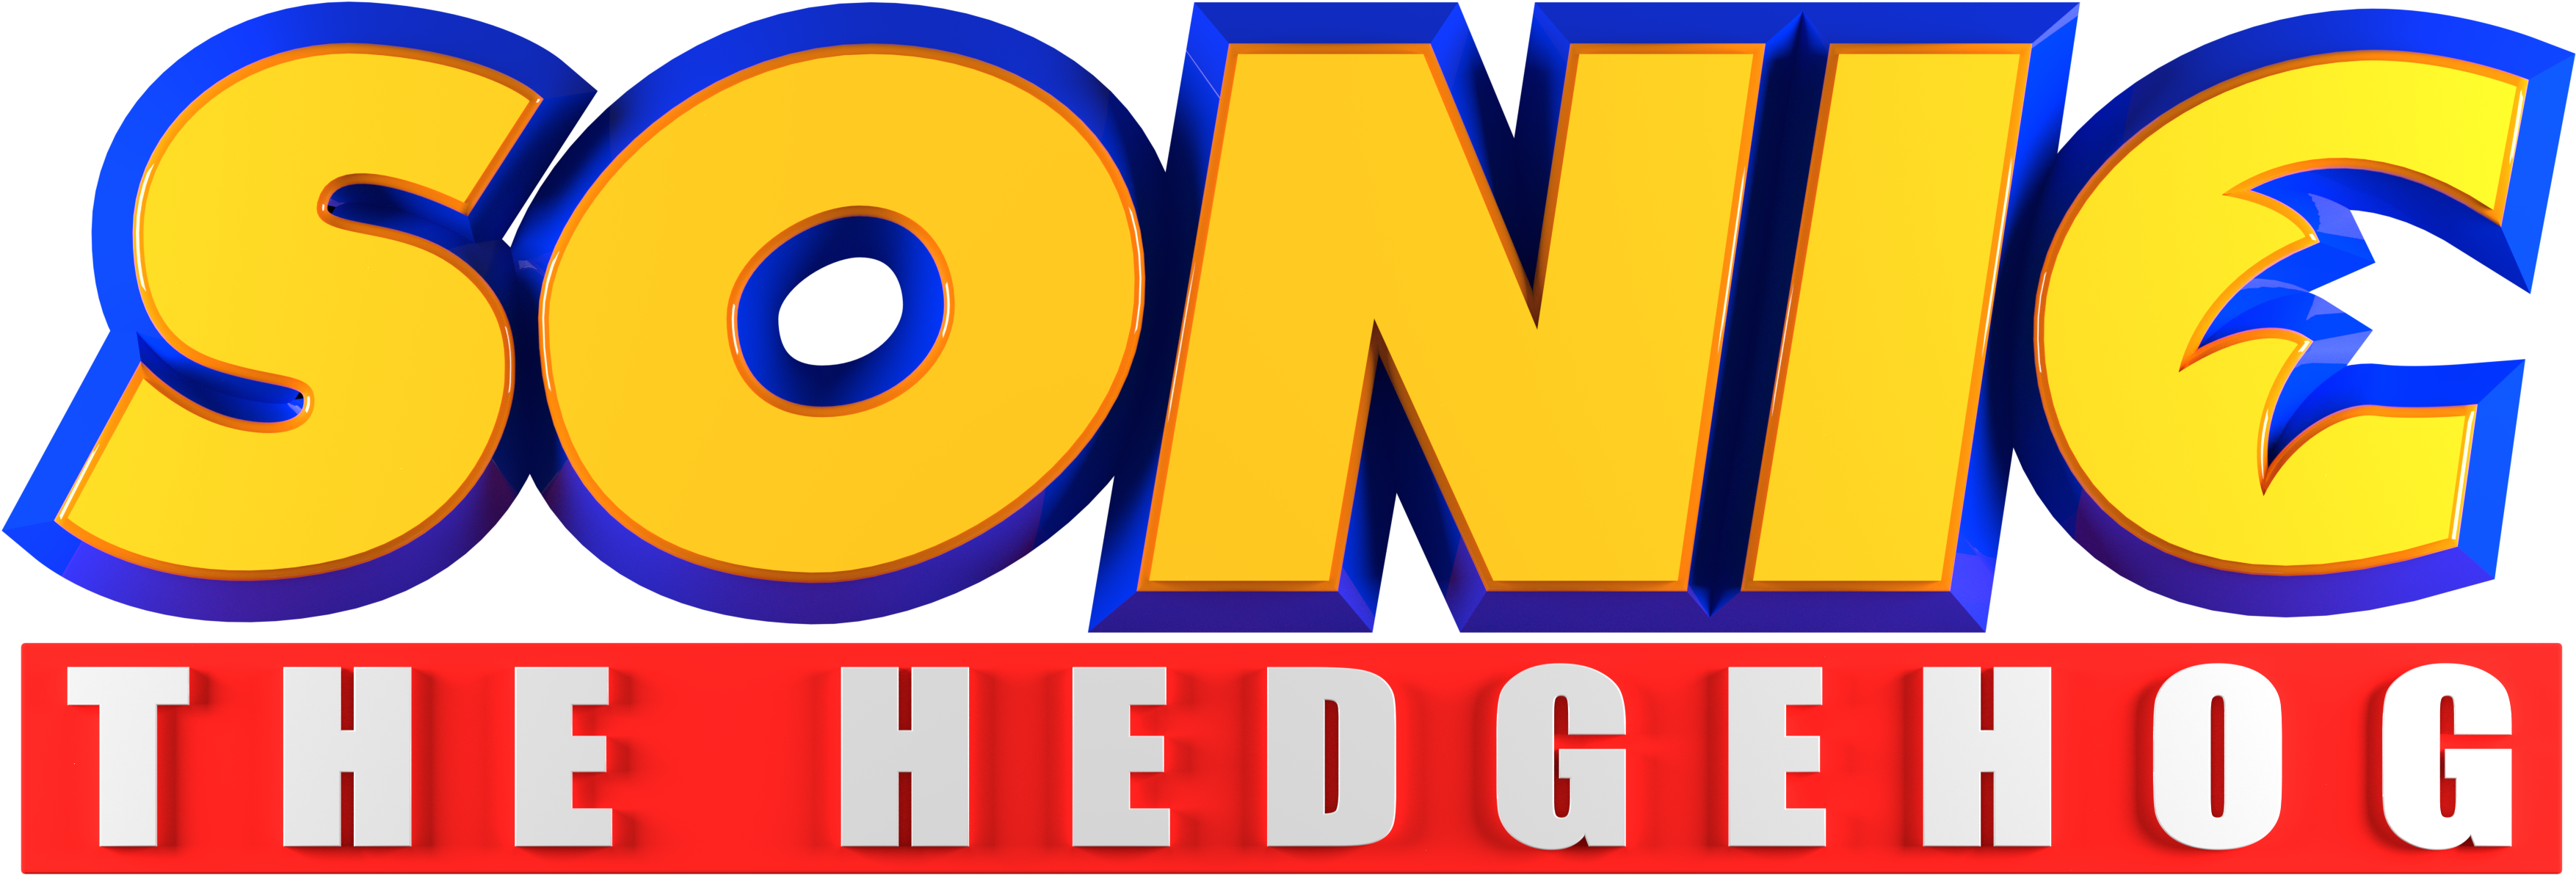 Sonic The Hedgehog Logo PNG HD Photos